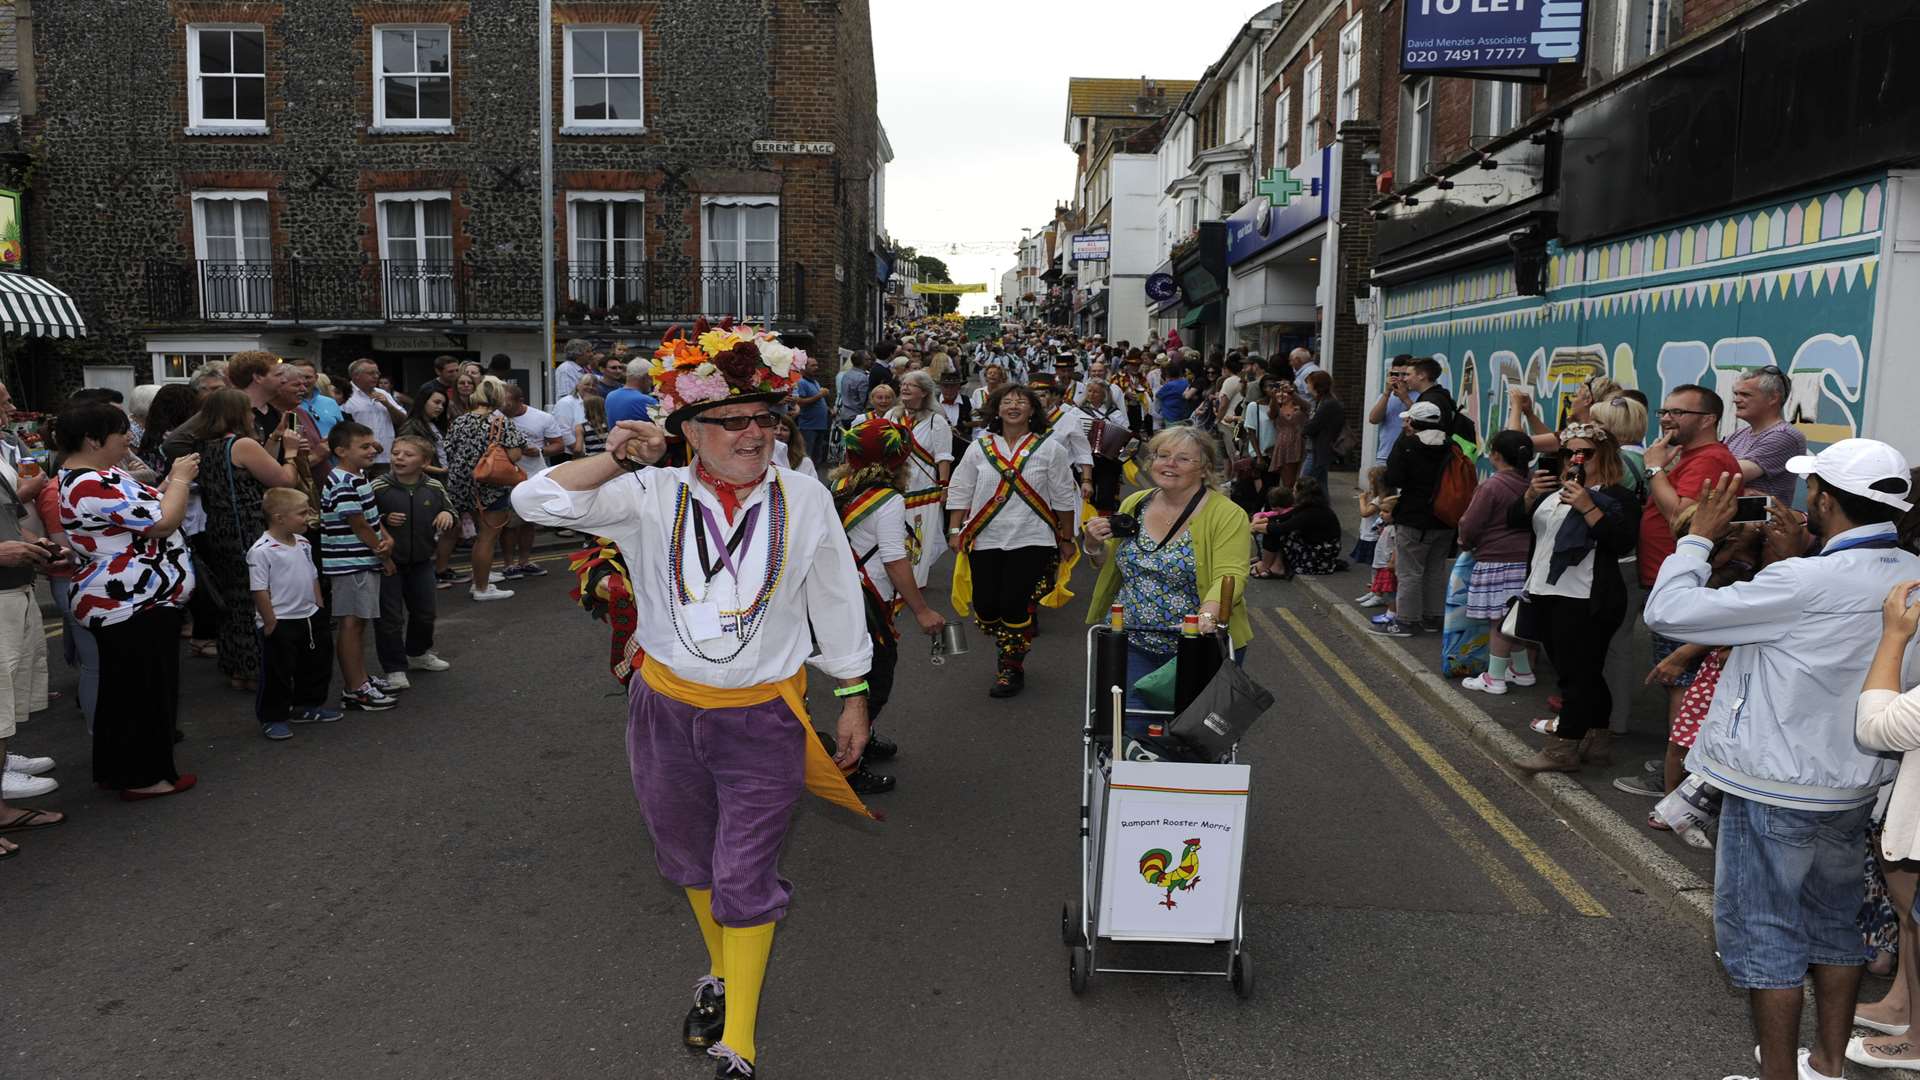 The opening parade of Broadstairs Folk Week last year